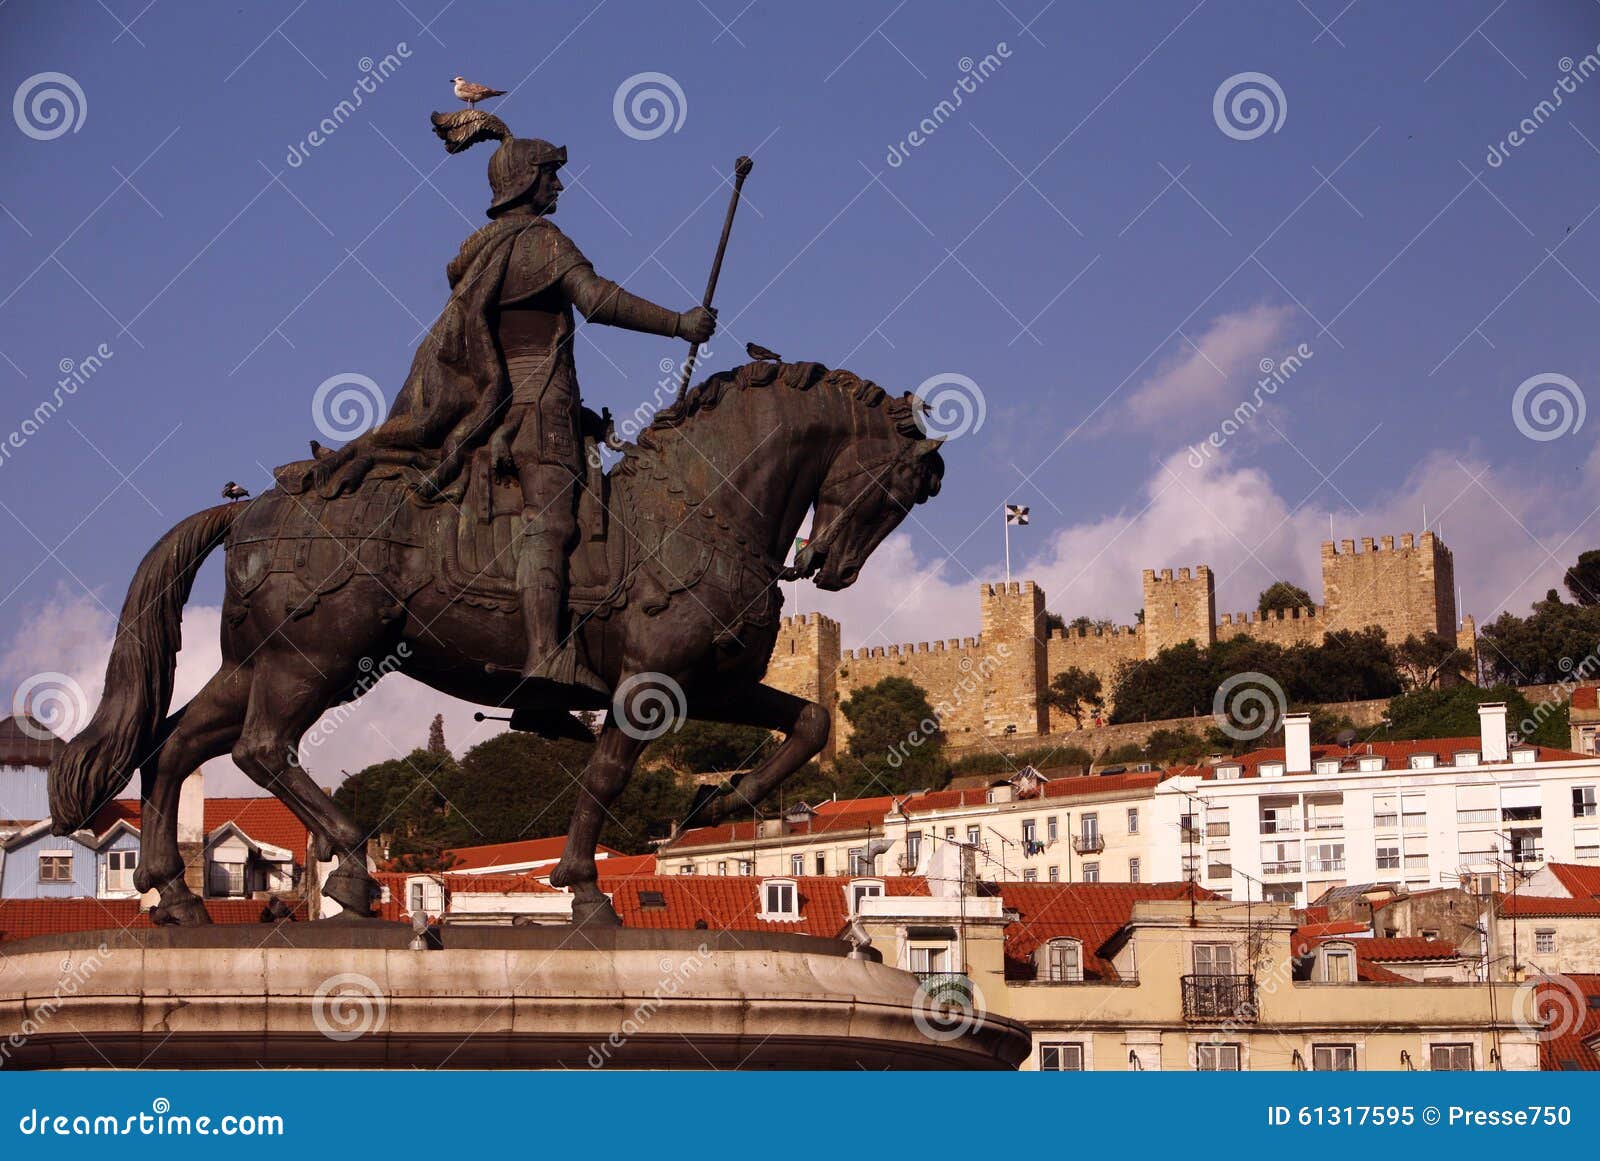 europe portugal lisbon baixa castelo